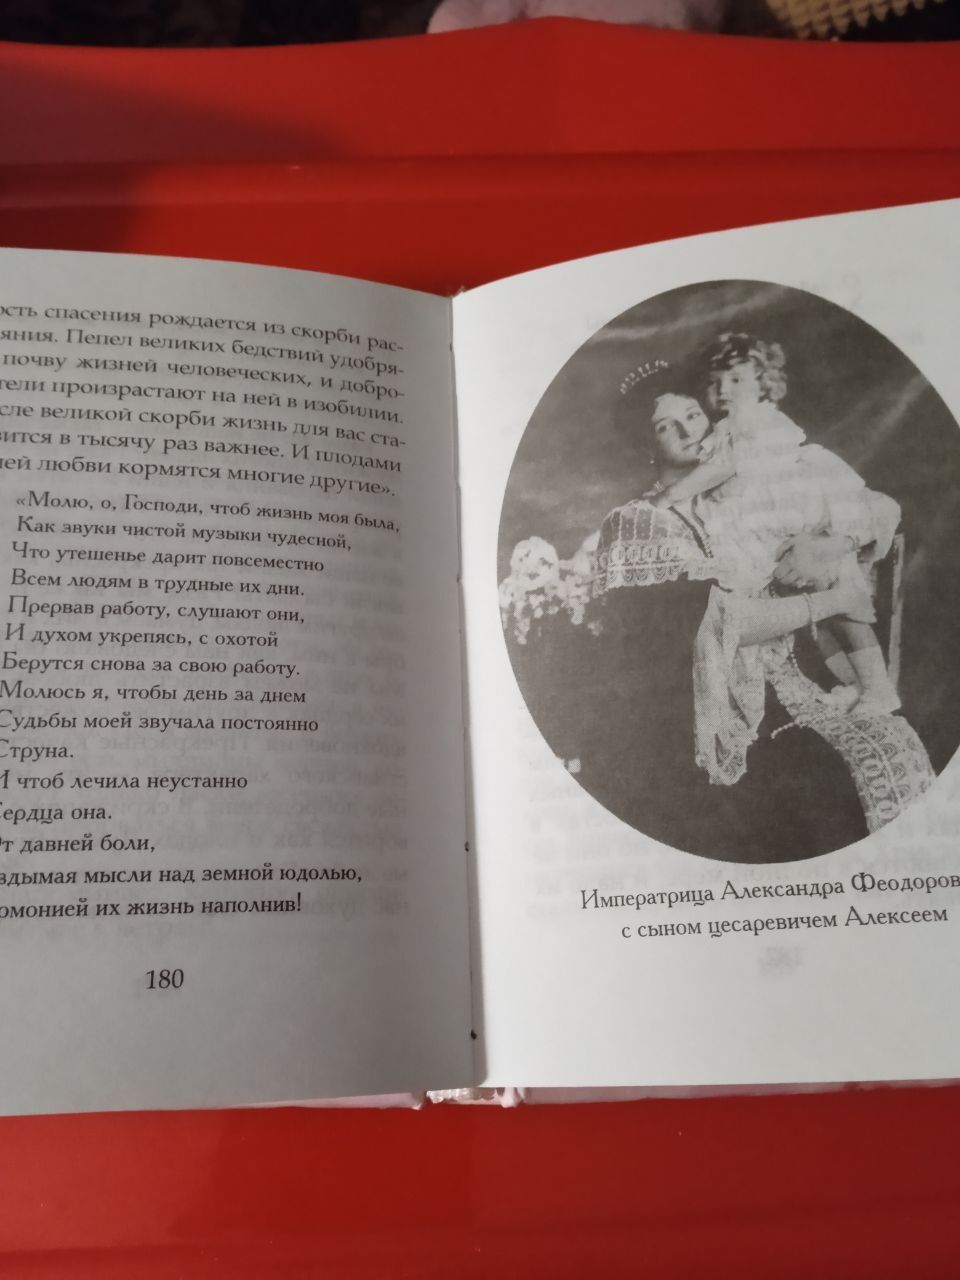 Книга "Дарите любовь" Императрица Александра Романова